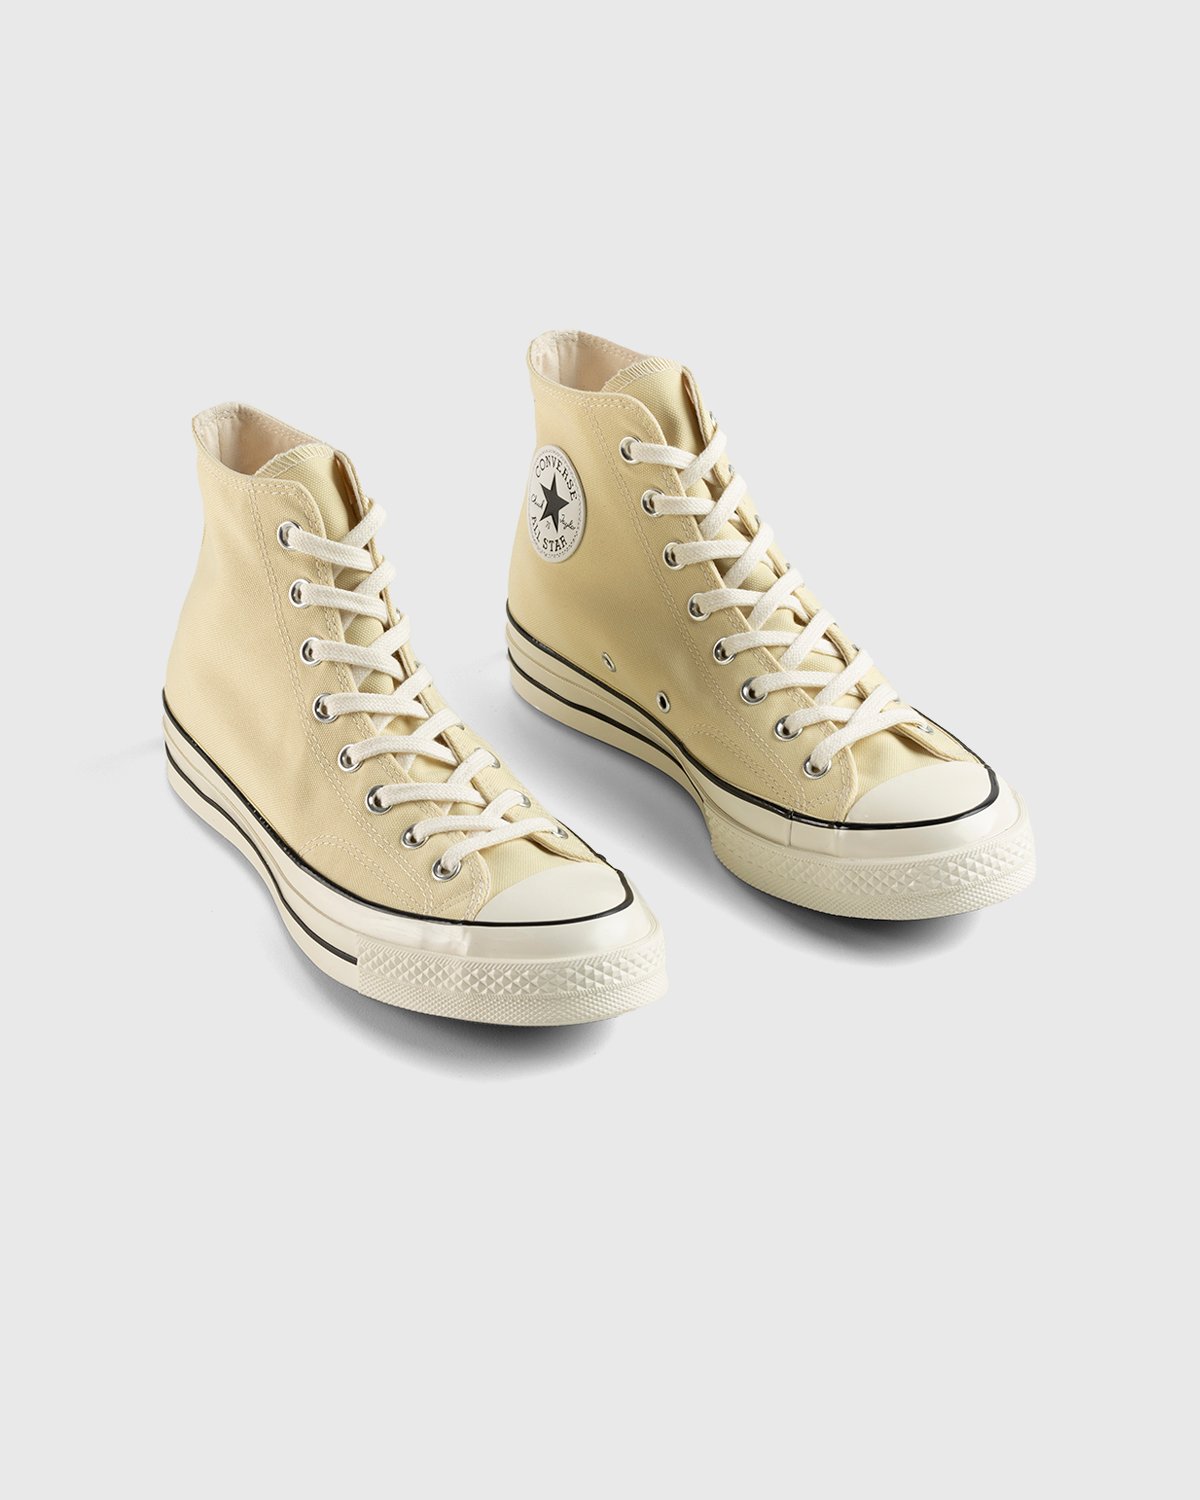 Converse - Chuck 70 Hi Lemon Drop/Egret/Black - Footwear - Yellow - Image 3